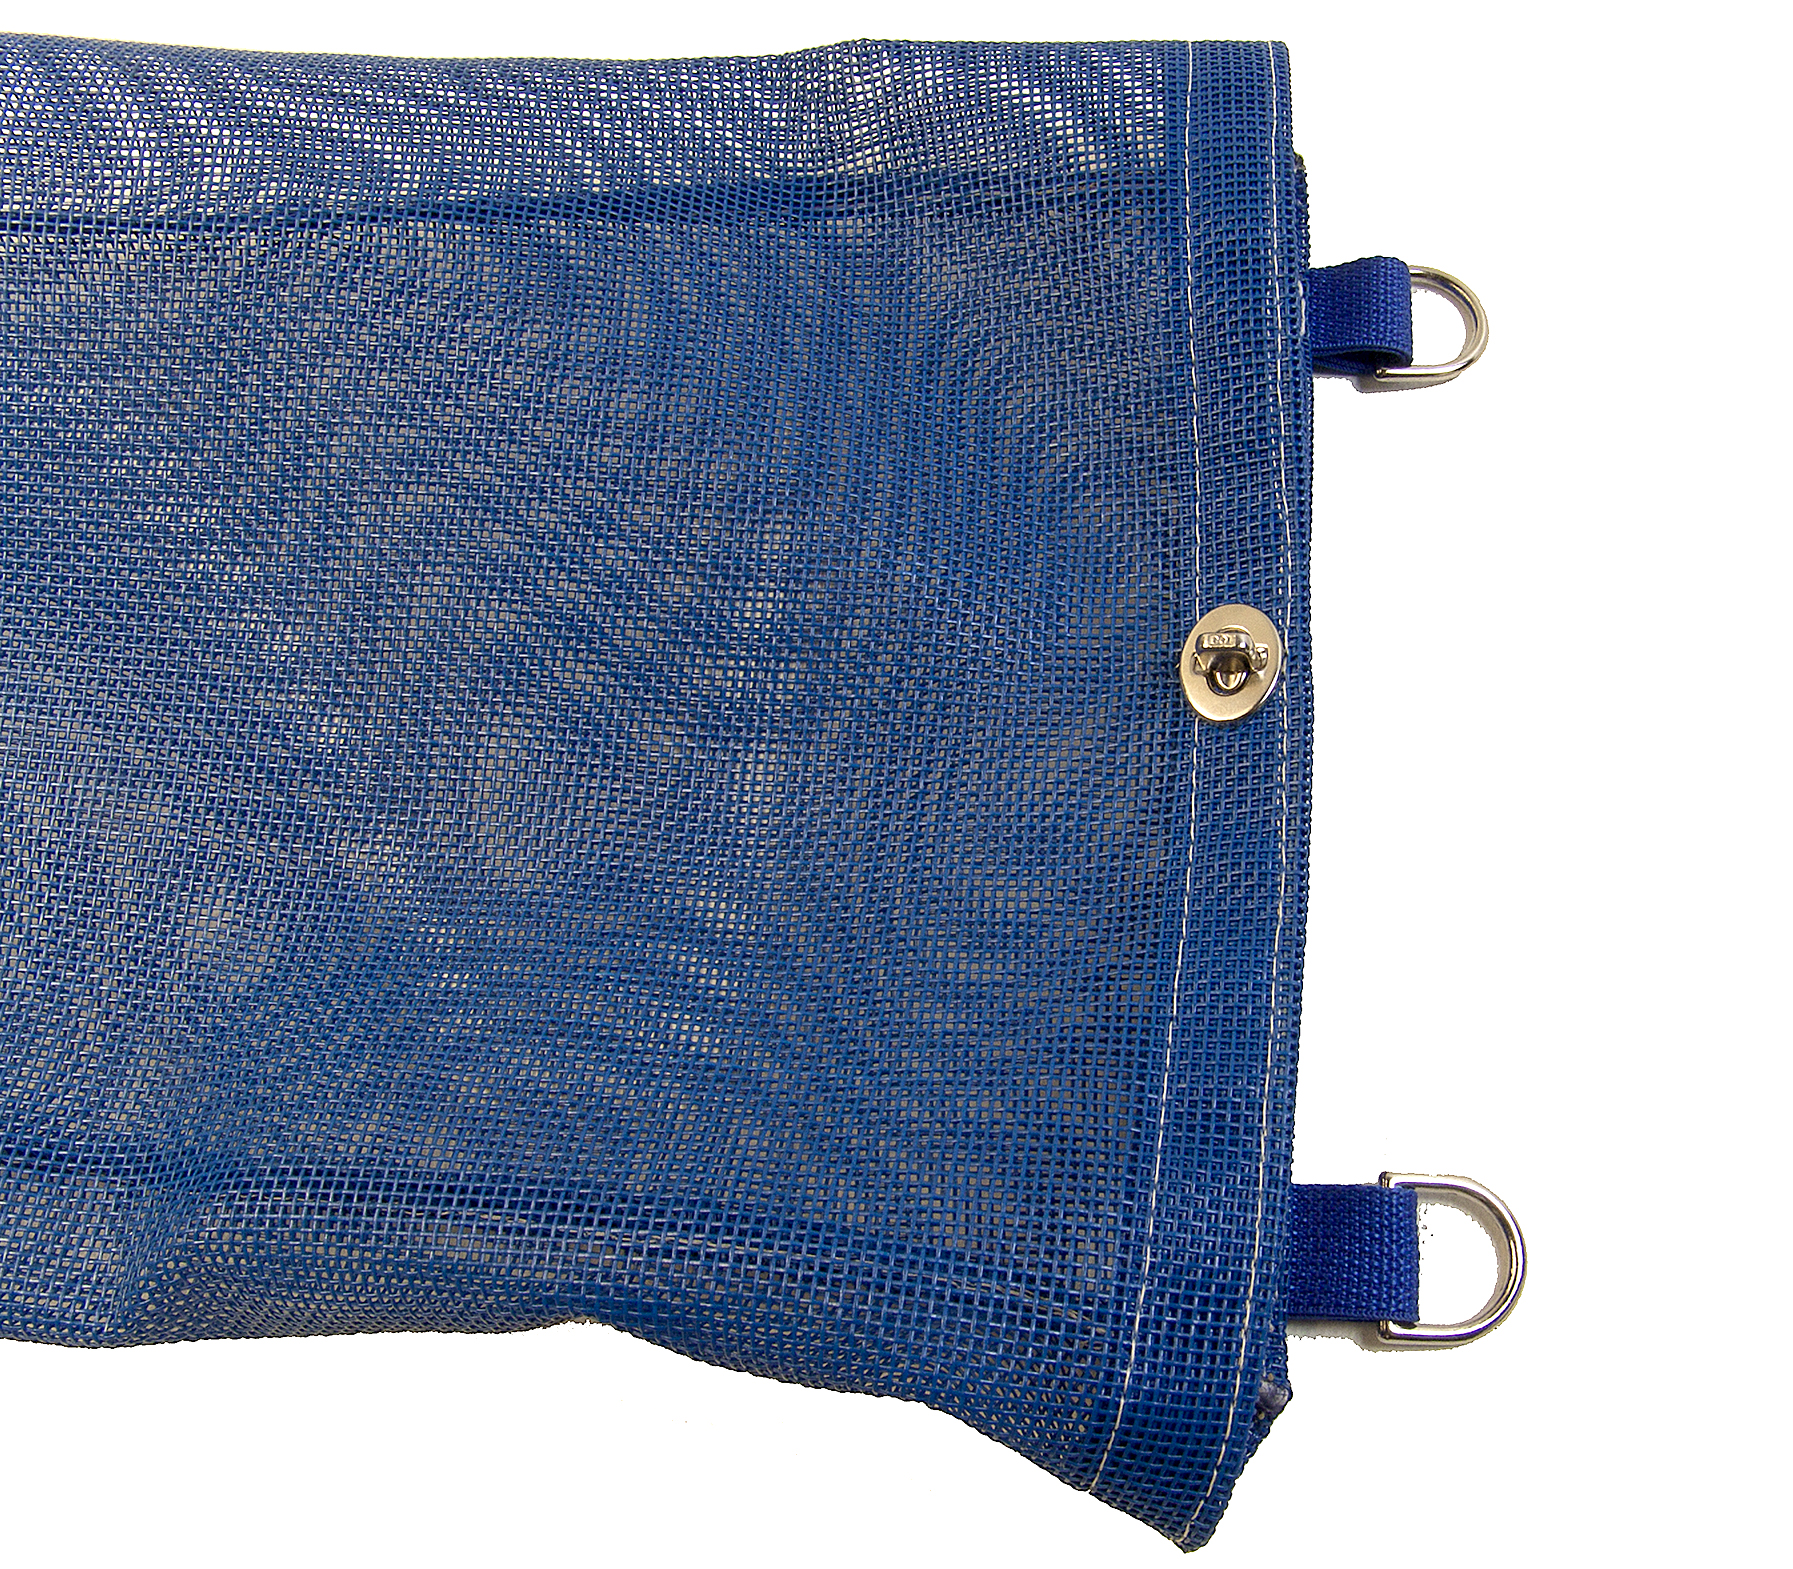 PMI Rope Bag – Rescue Gear